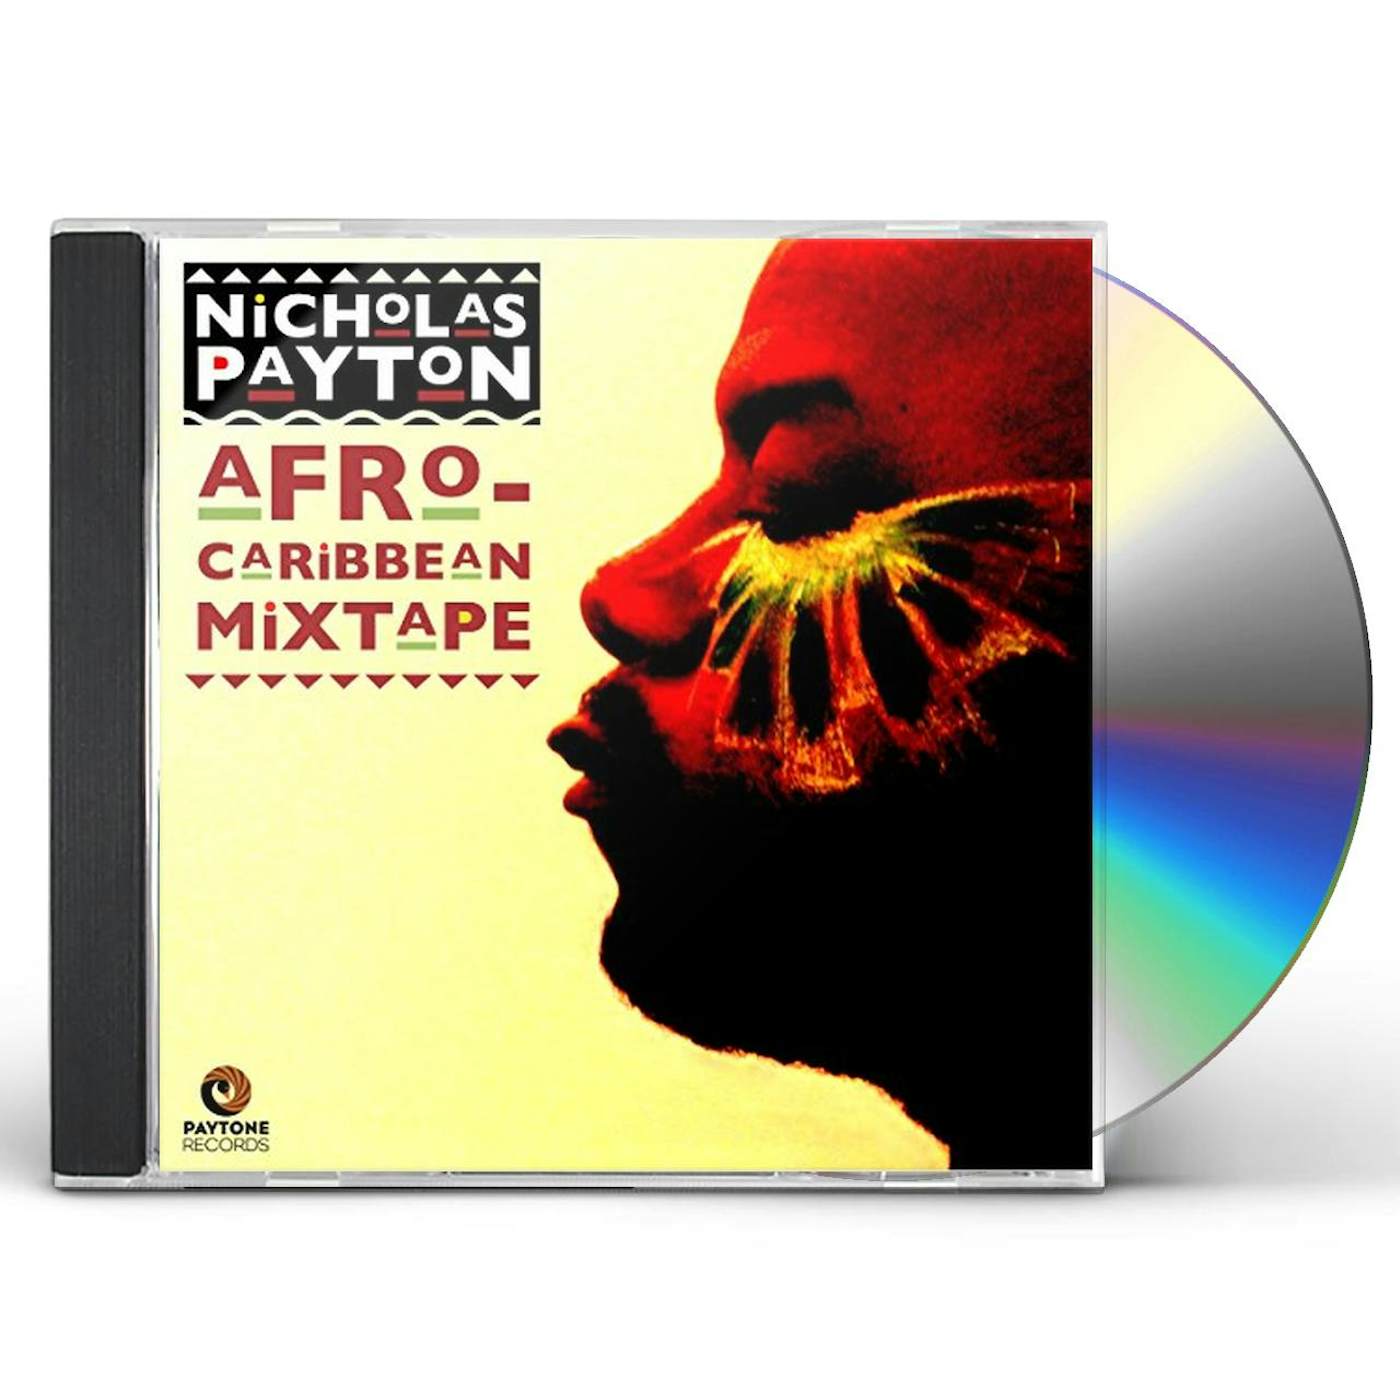 Nicholas Payton AFRO-CARIBBEAN MIXTAPE CD